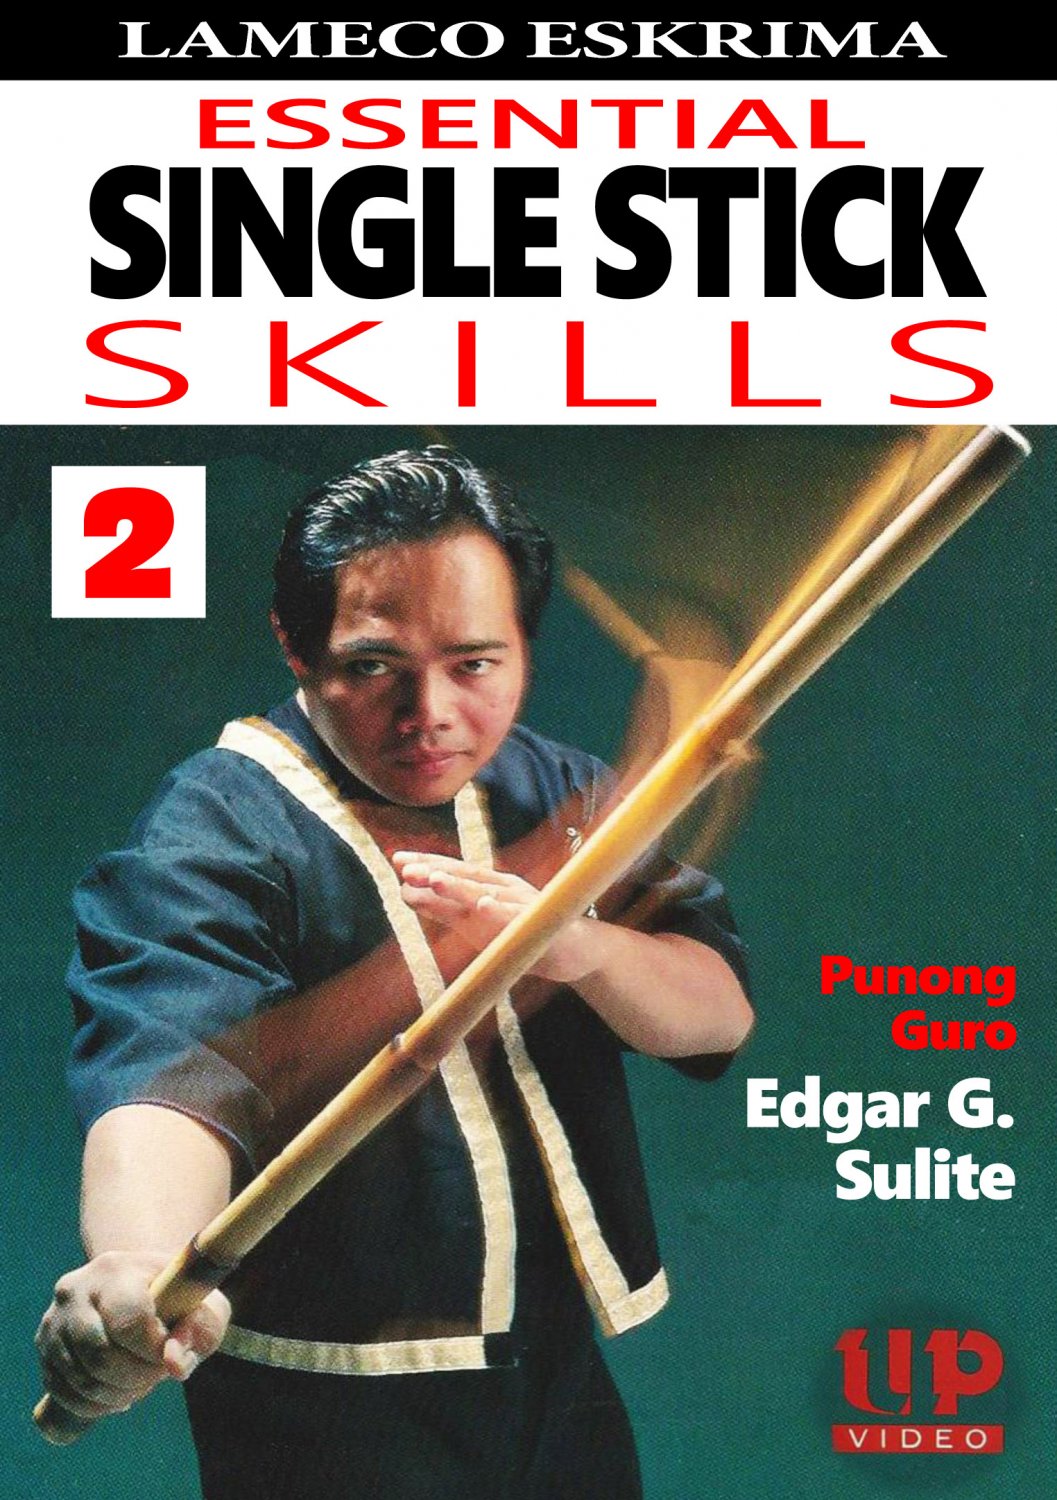 VD5148A  Lameco Eskrima Essential Single Stick Skills #2 Martial Arts DVD Edgar Sulite